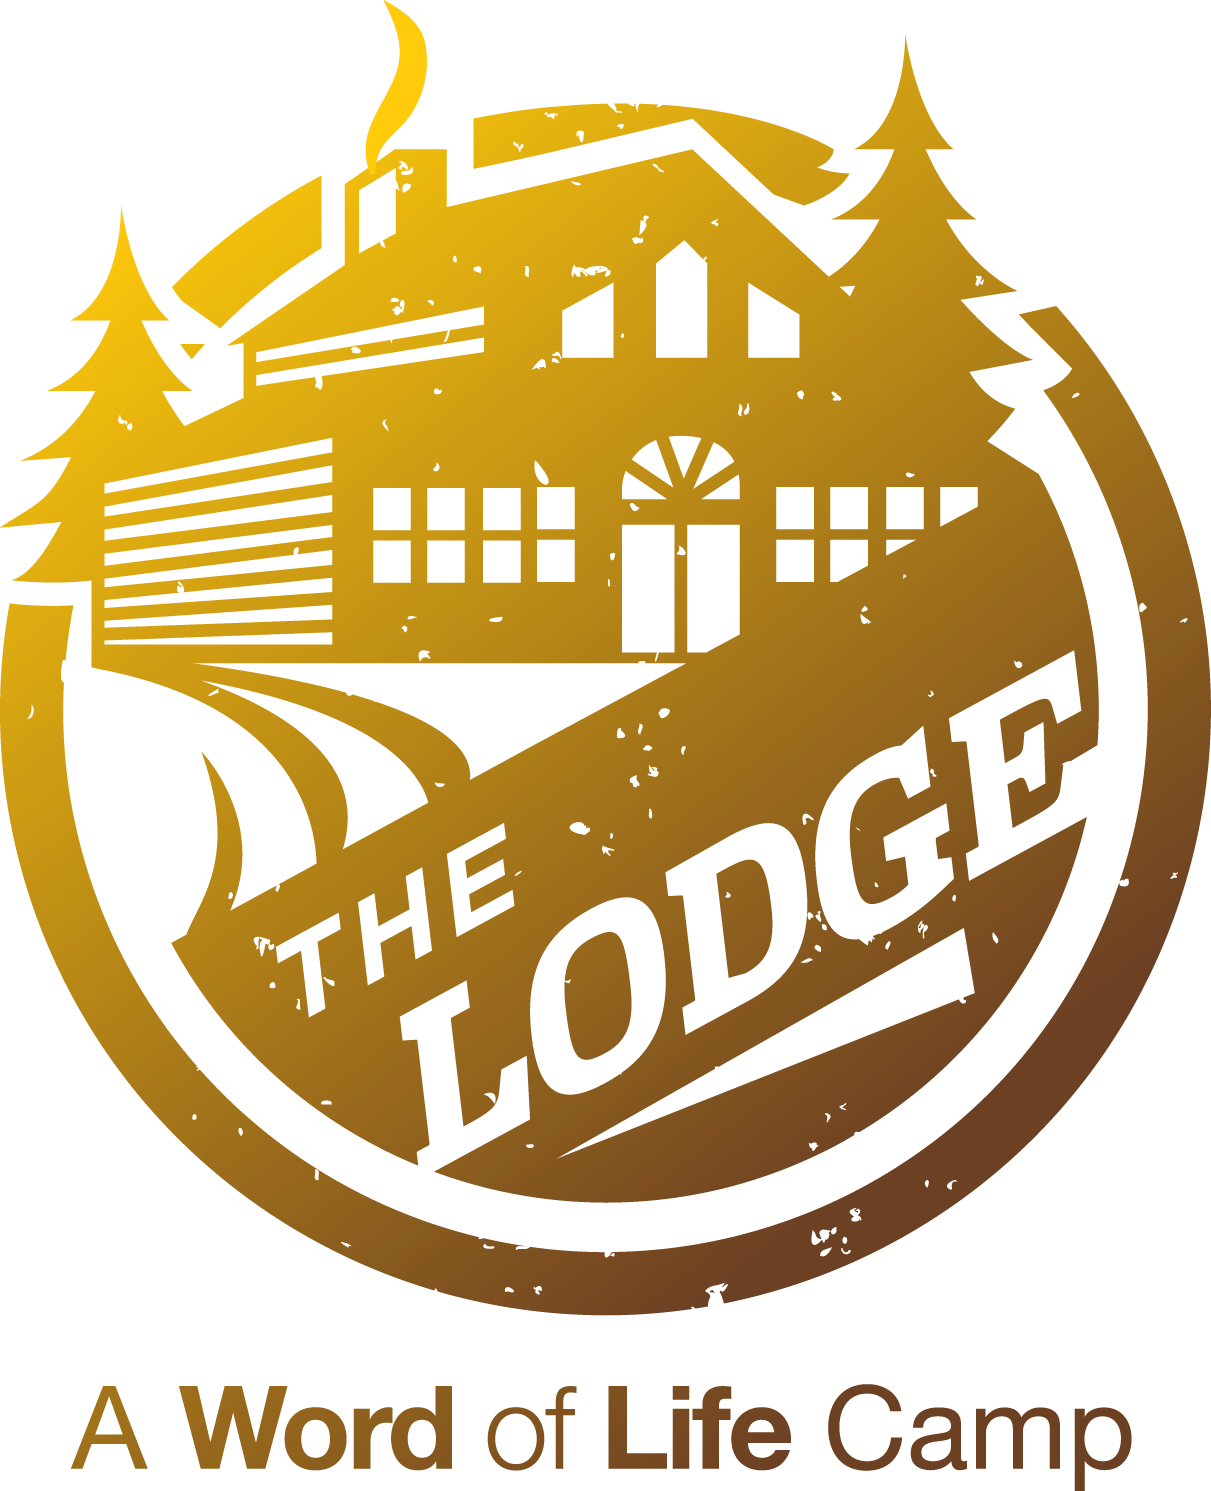 Lodge Logo - The Lodge Resort of Life